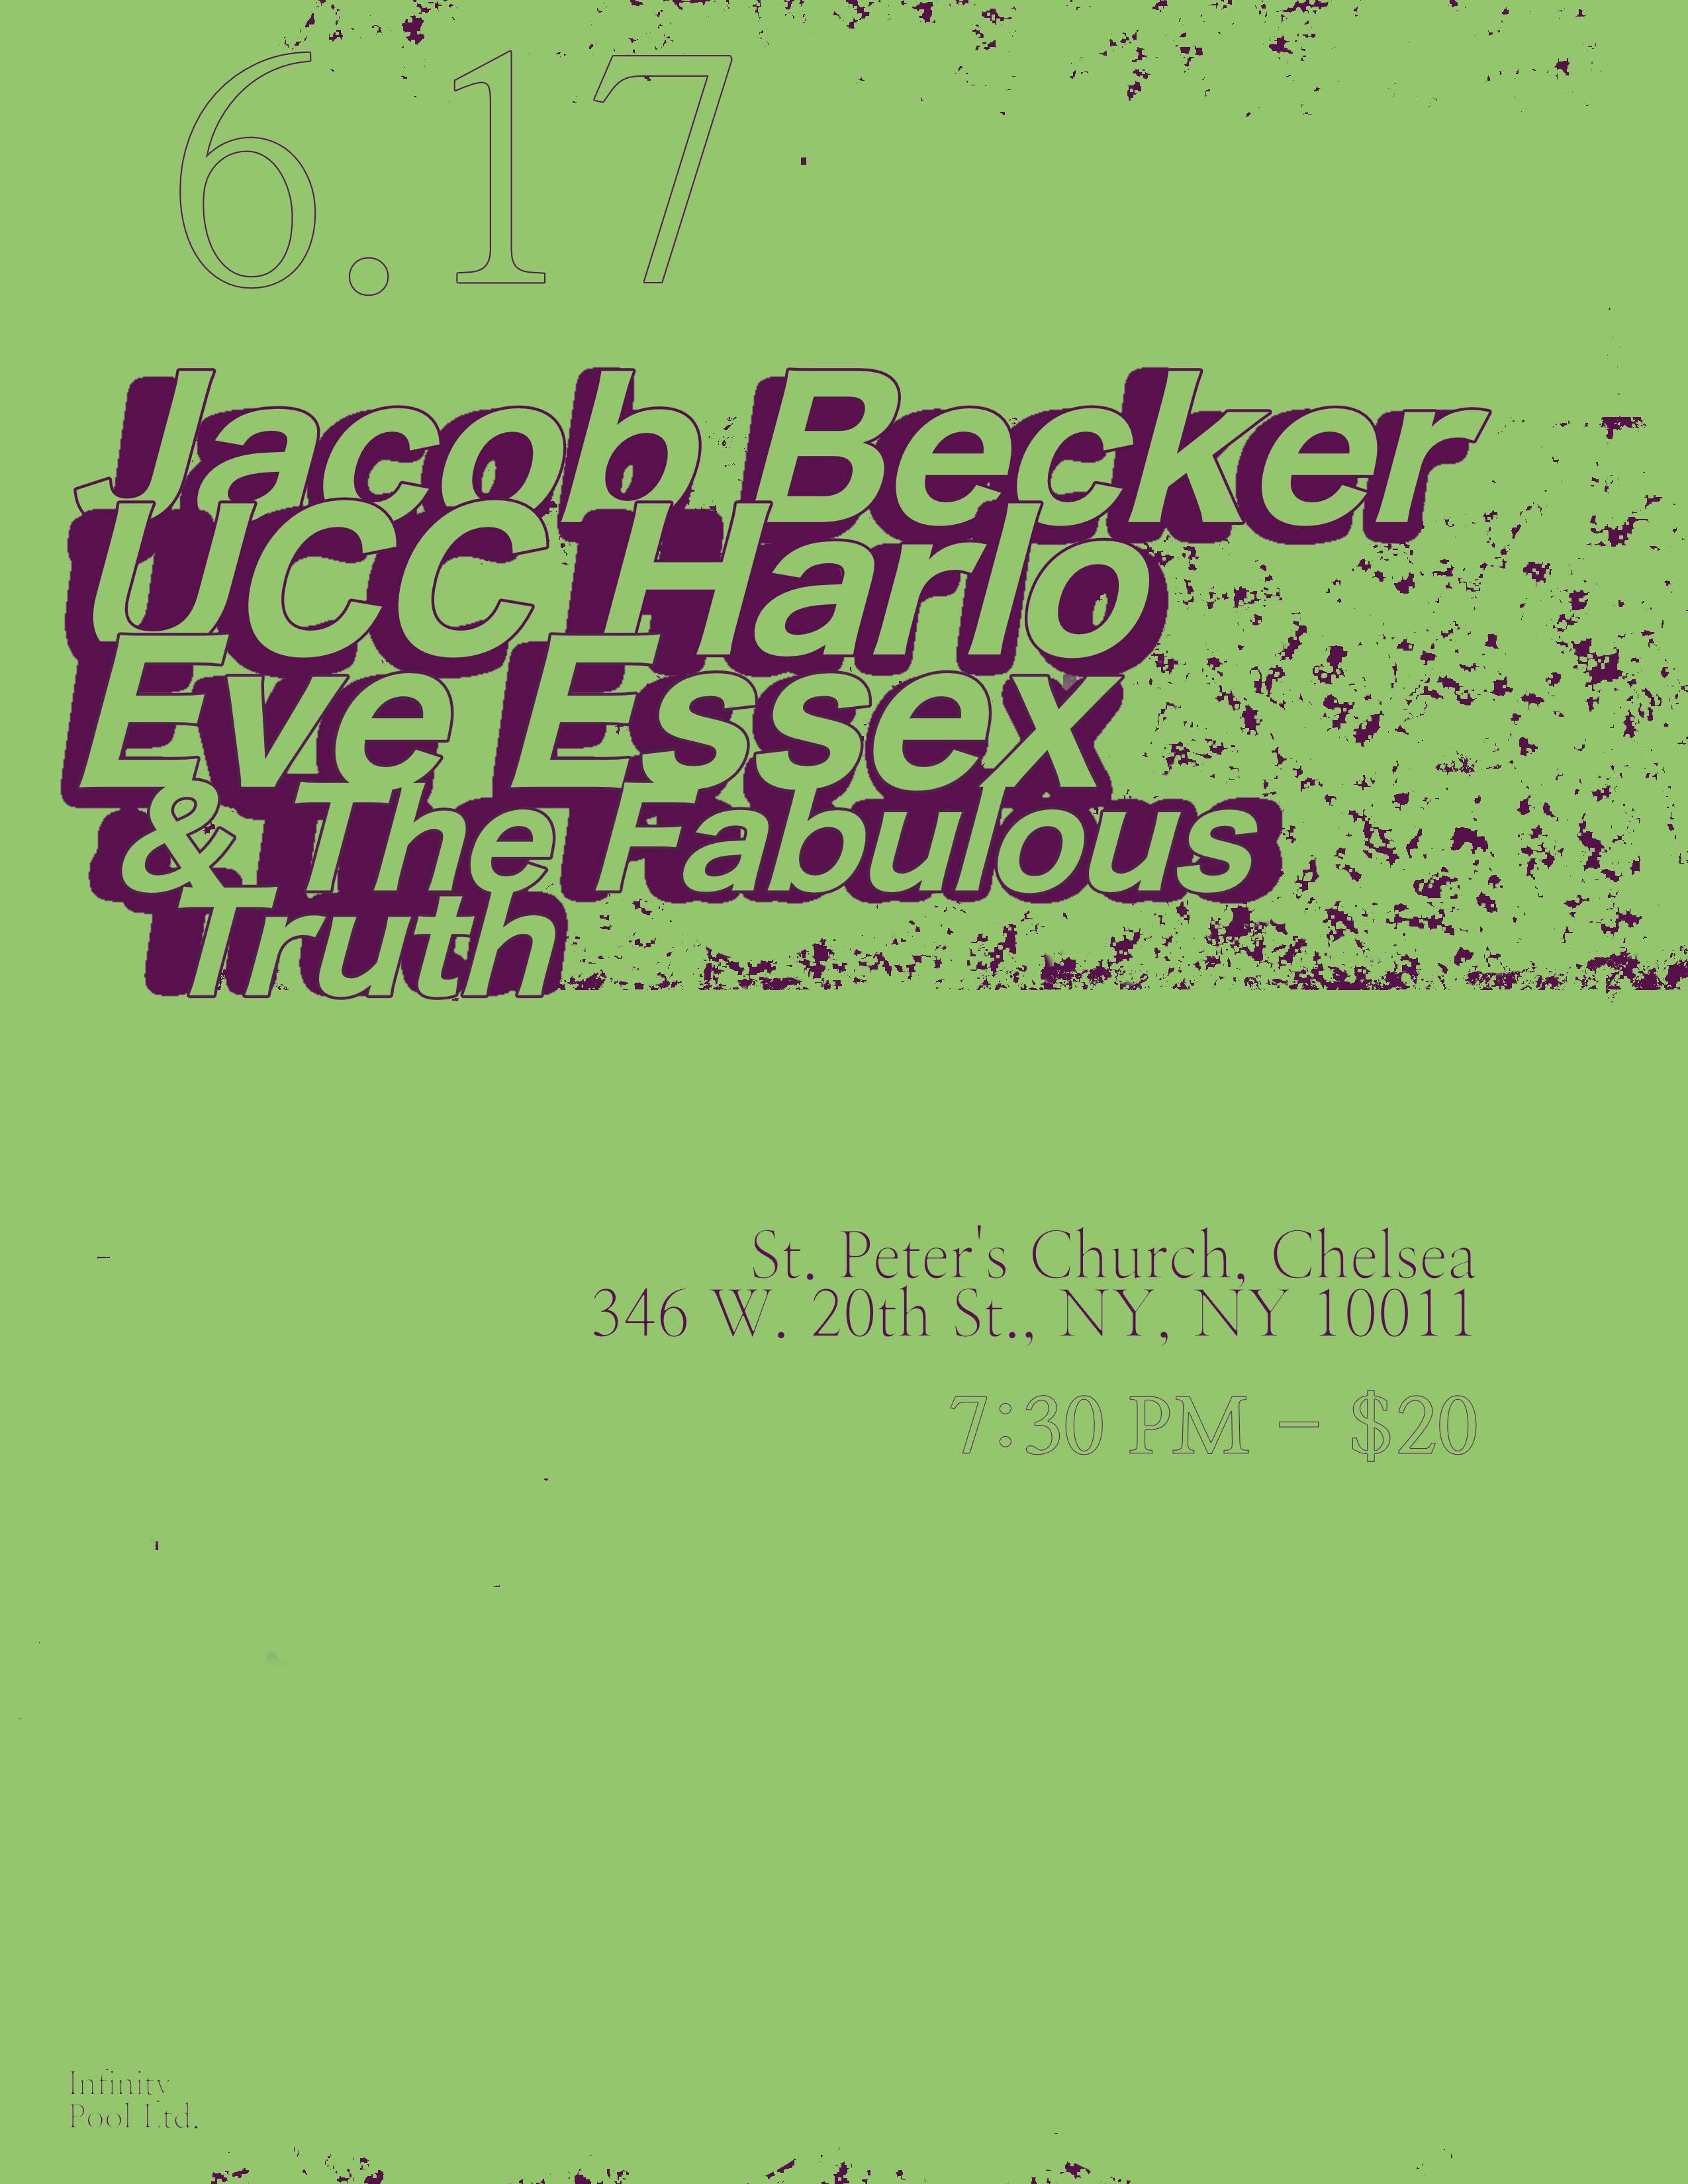 Eve Essex & The Fabulous Truth, Jacob Becker, UCC Harlo - Página frontal